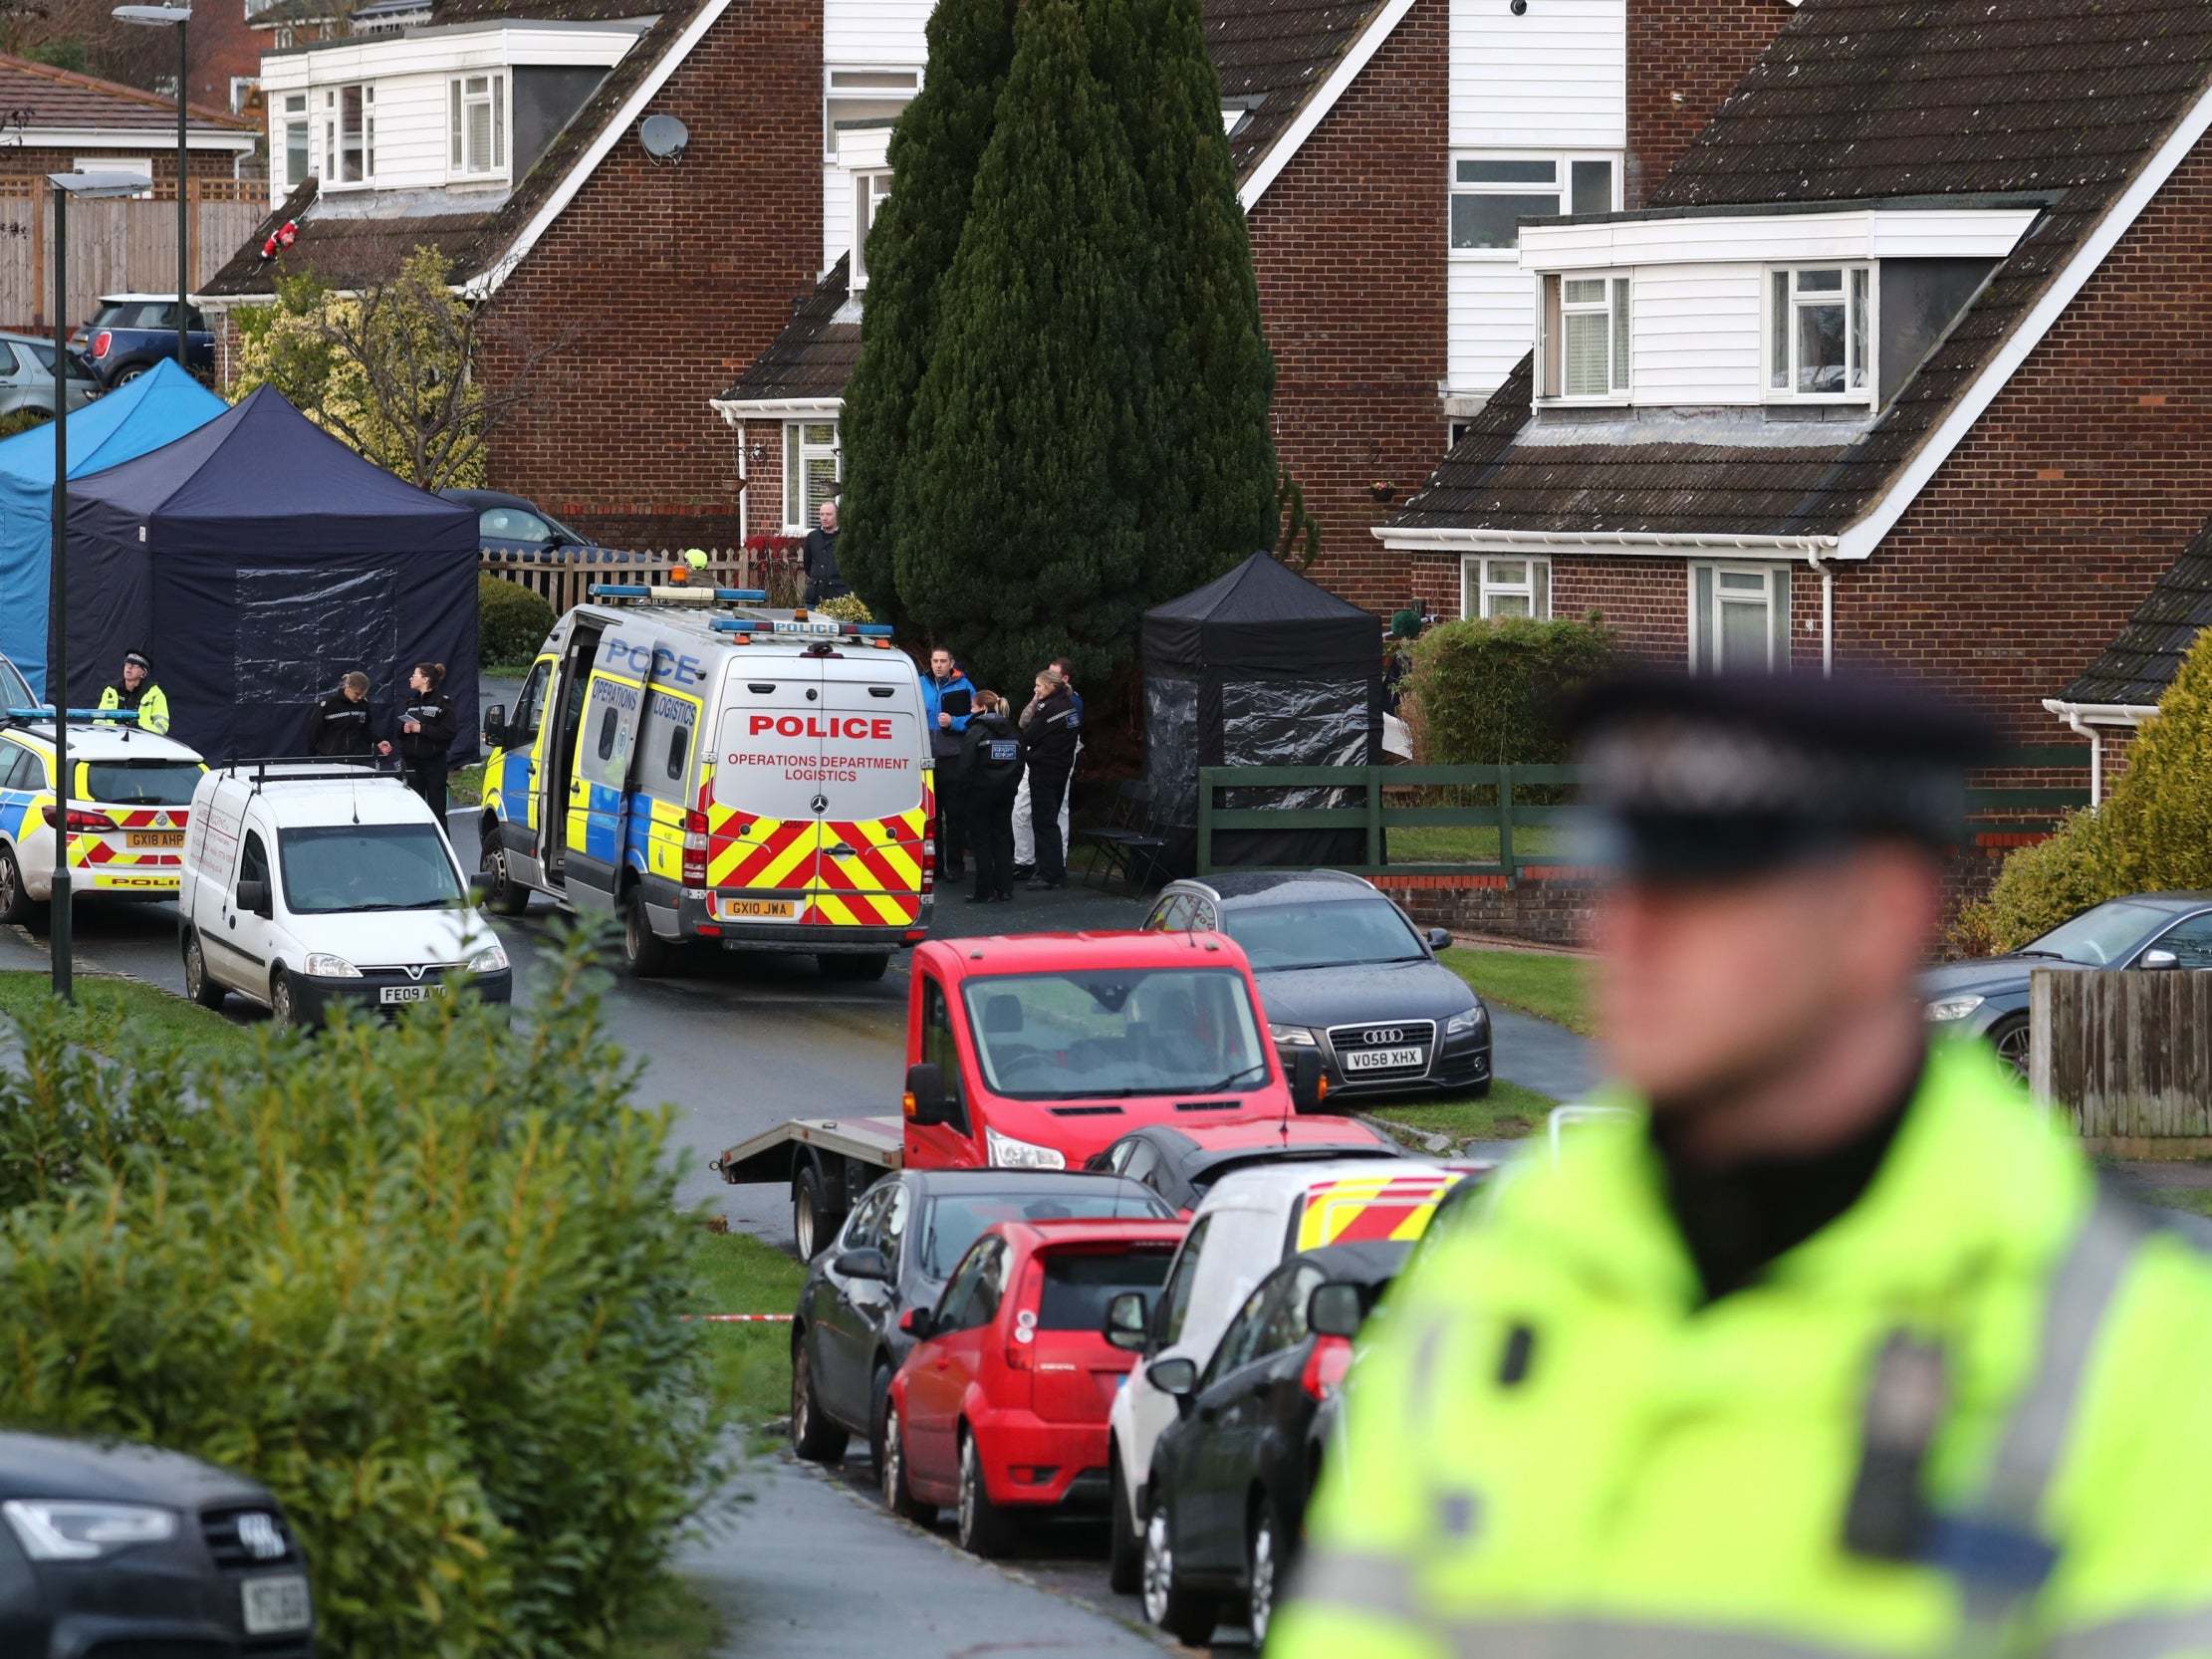 Police at a scene in Hazel Way, Crawley Down, West Sussex